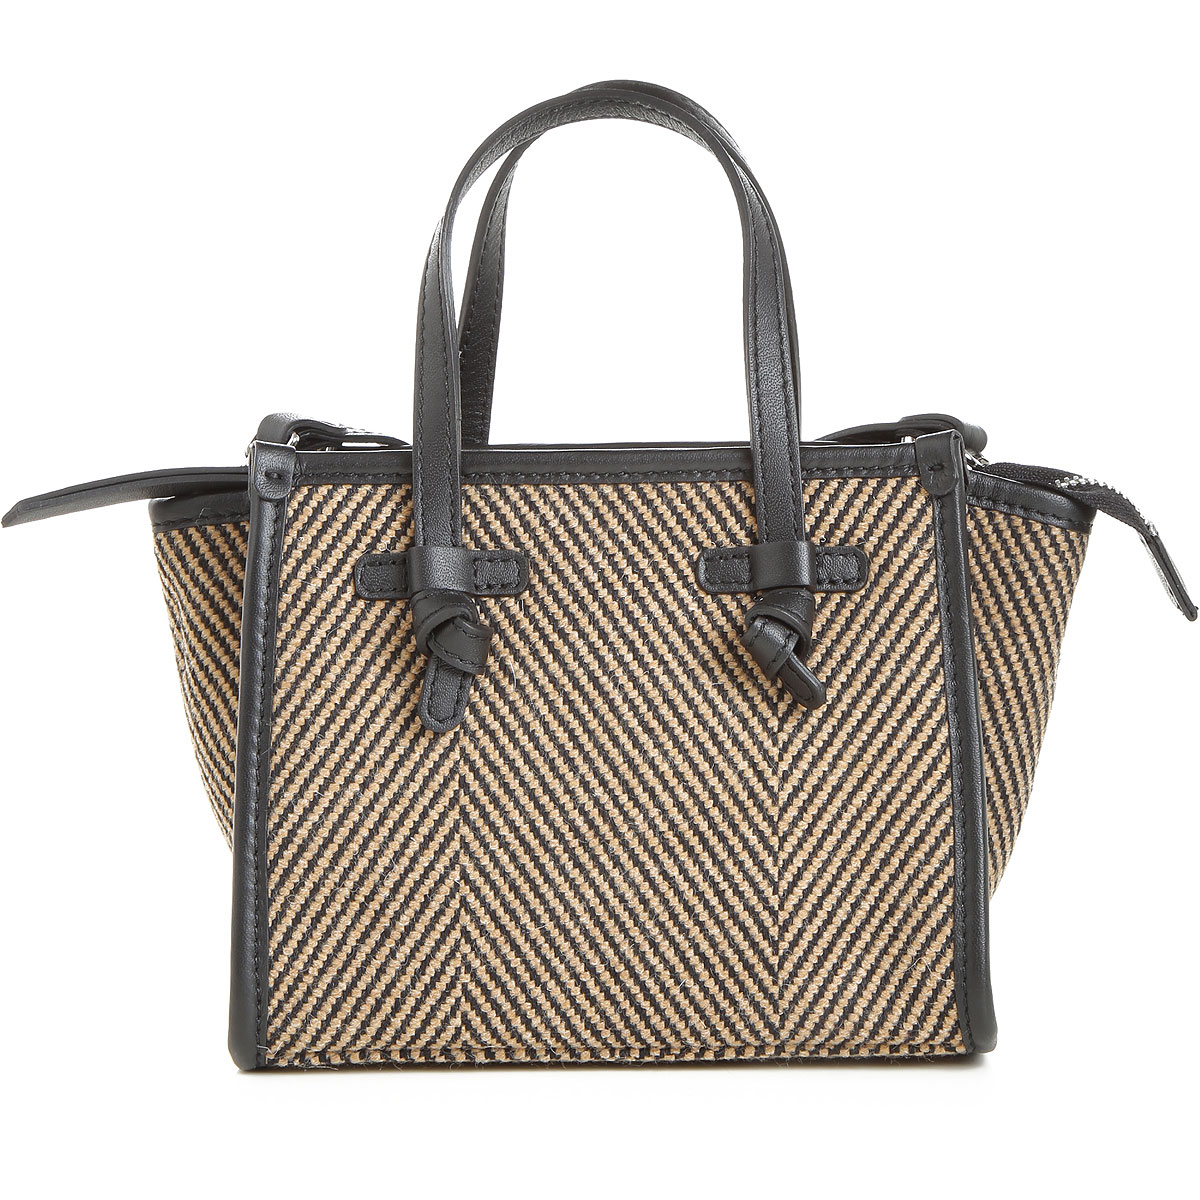 Handbags Gianni Chiarini, Style code: 8065-gri-